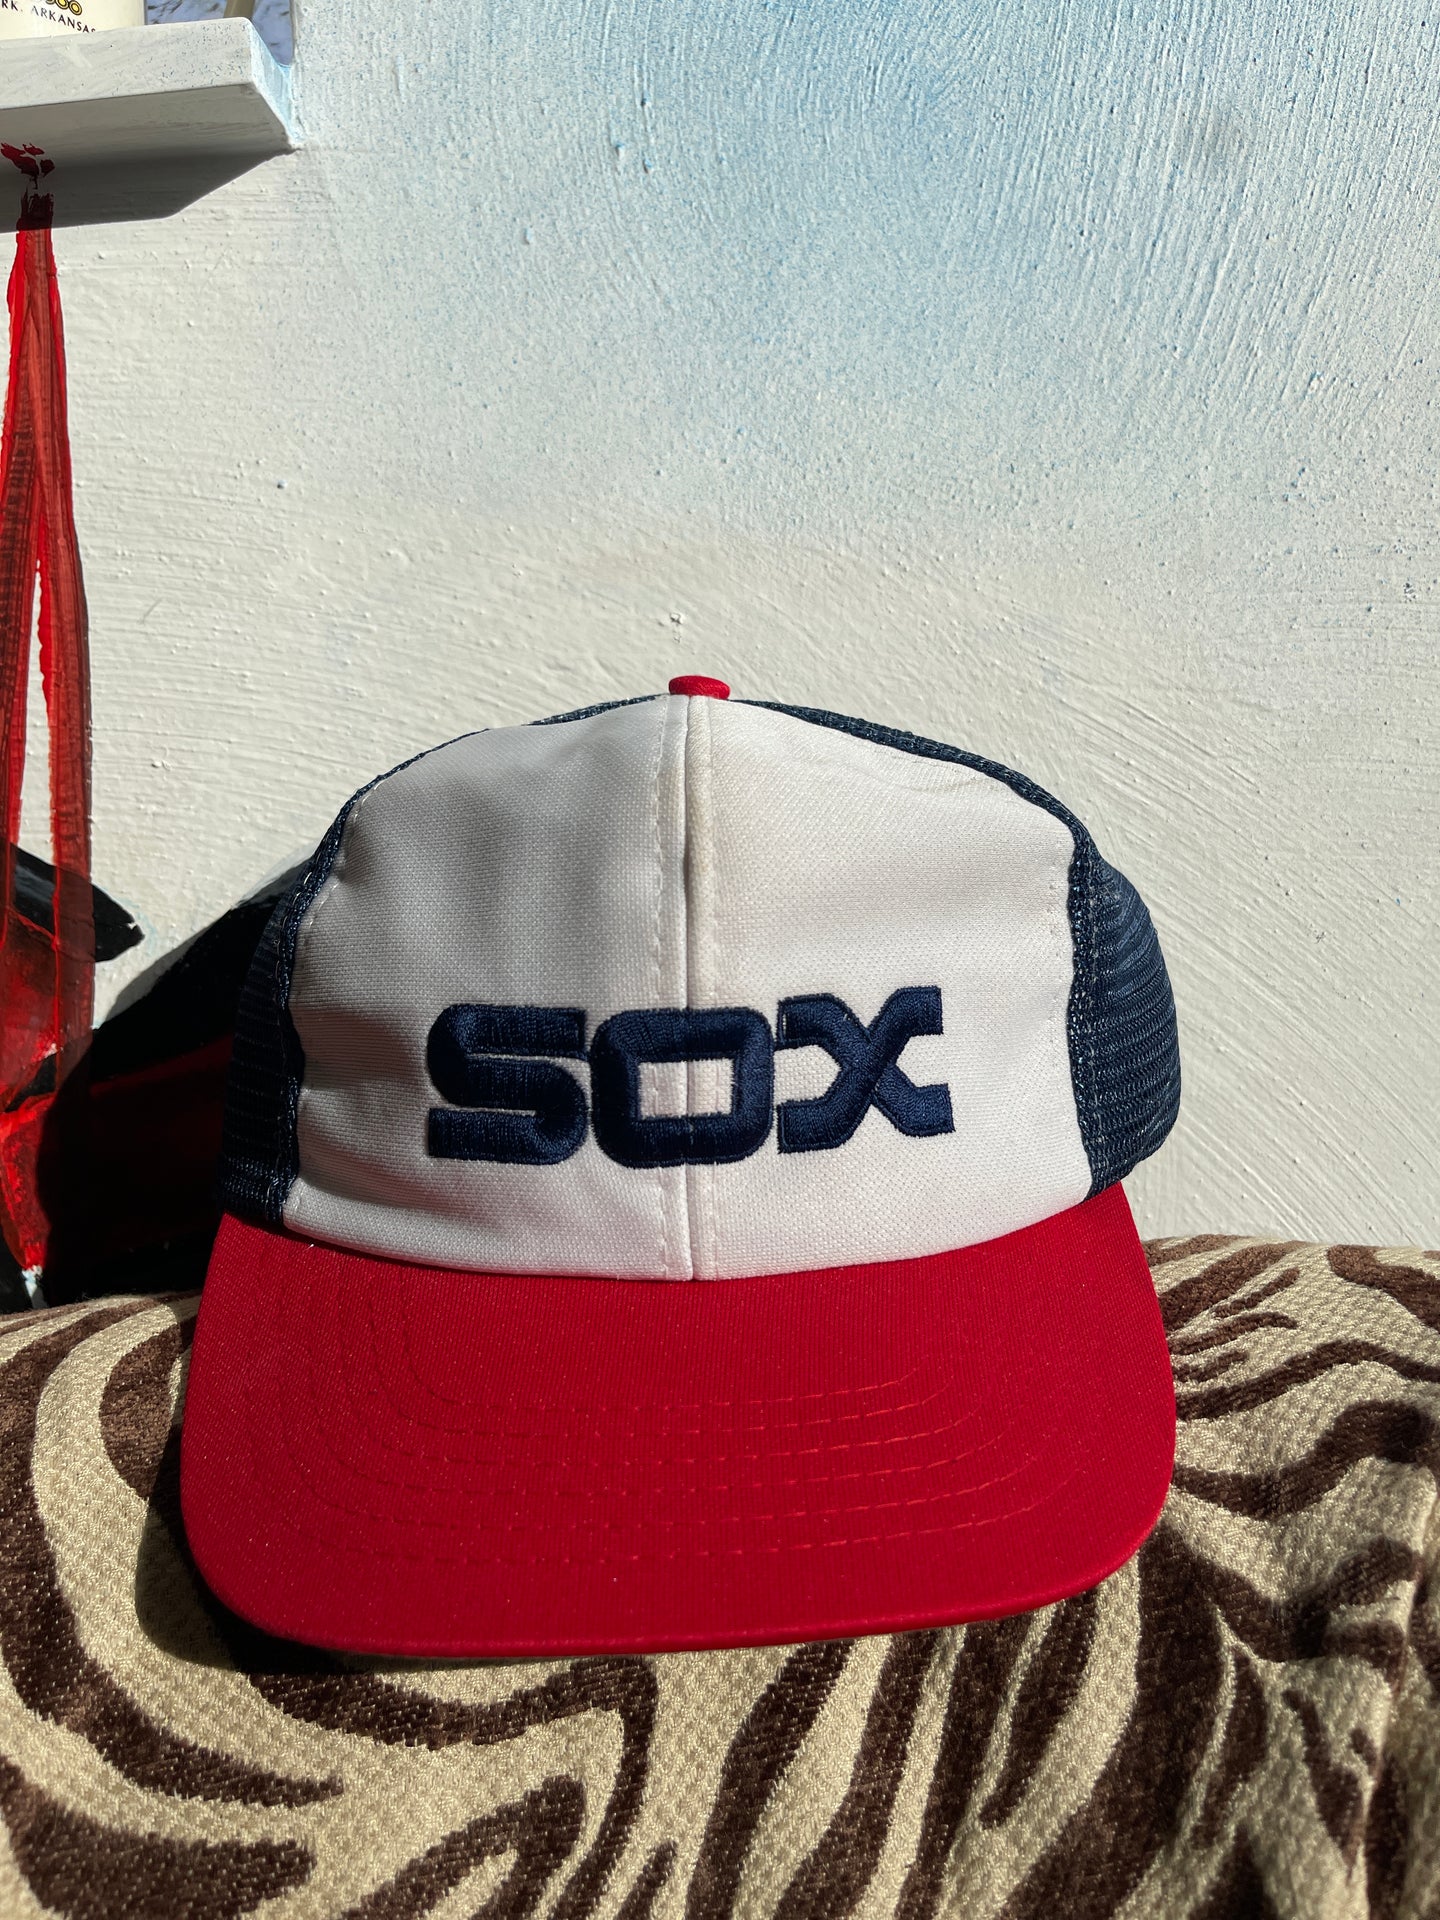 Vintage White Sox Hat